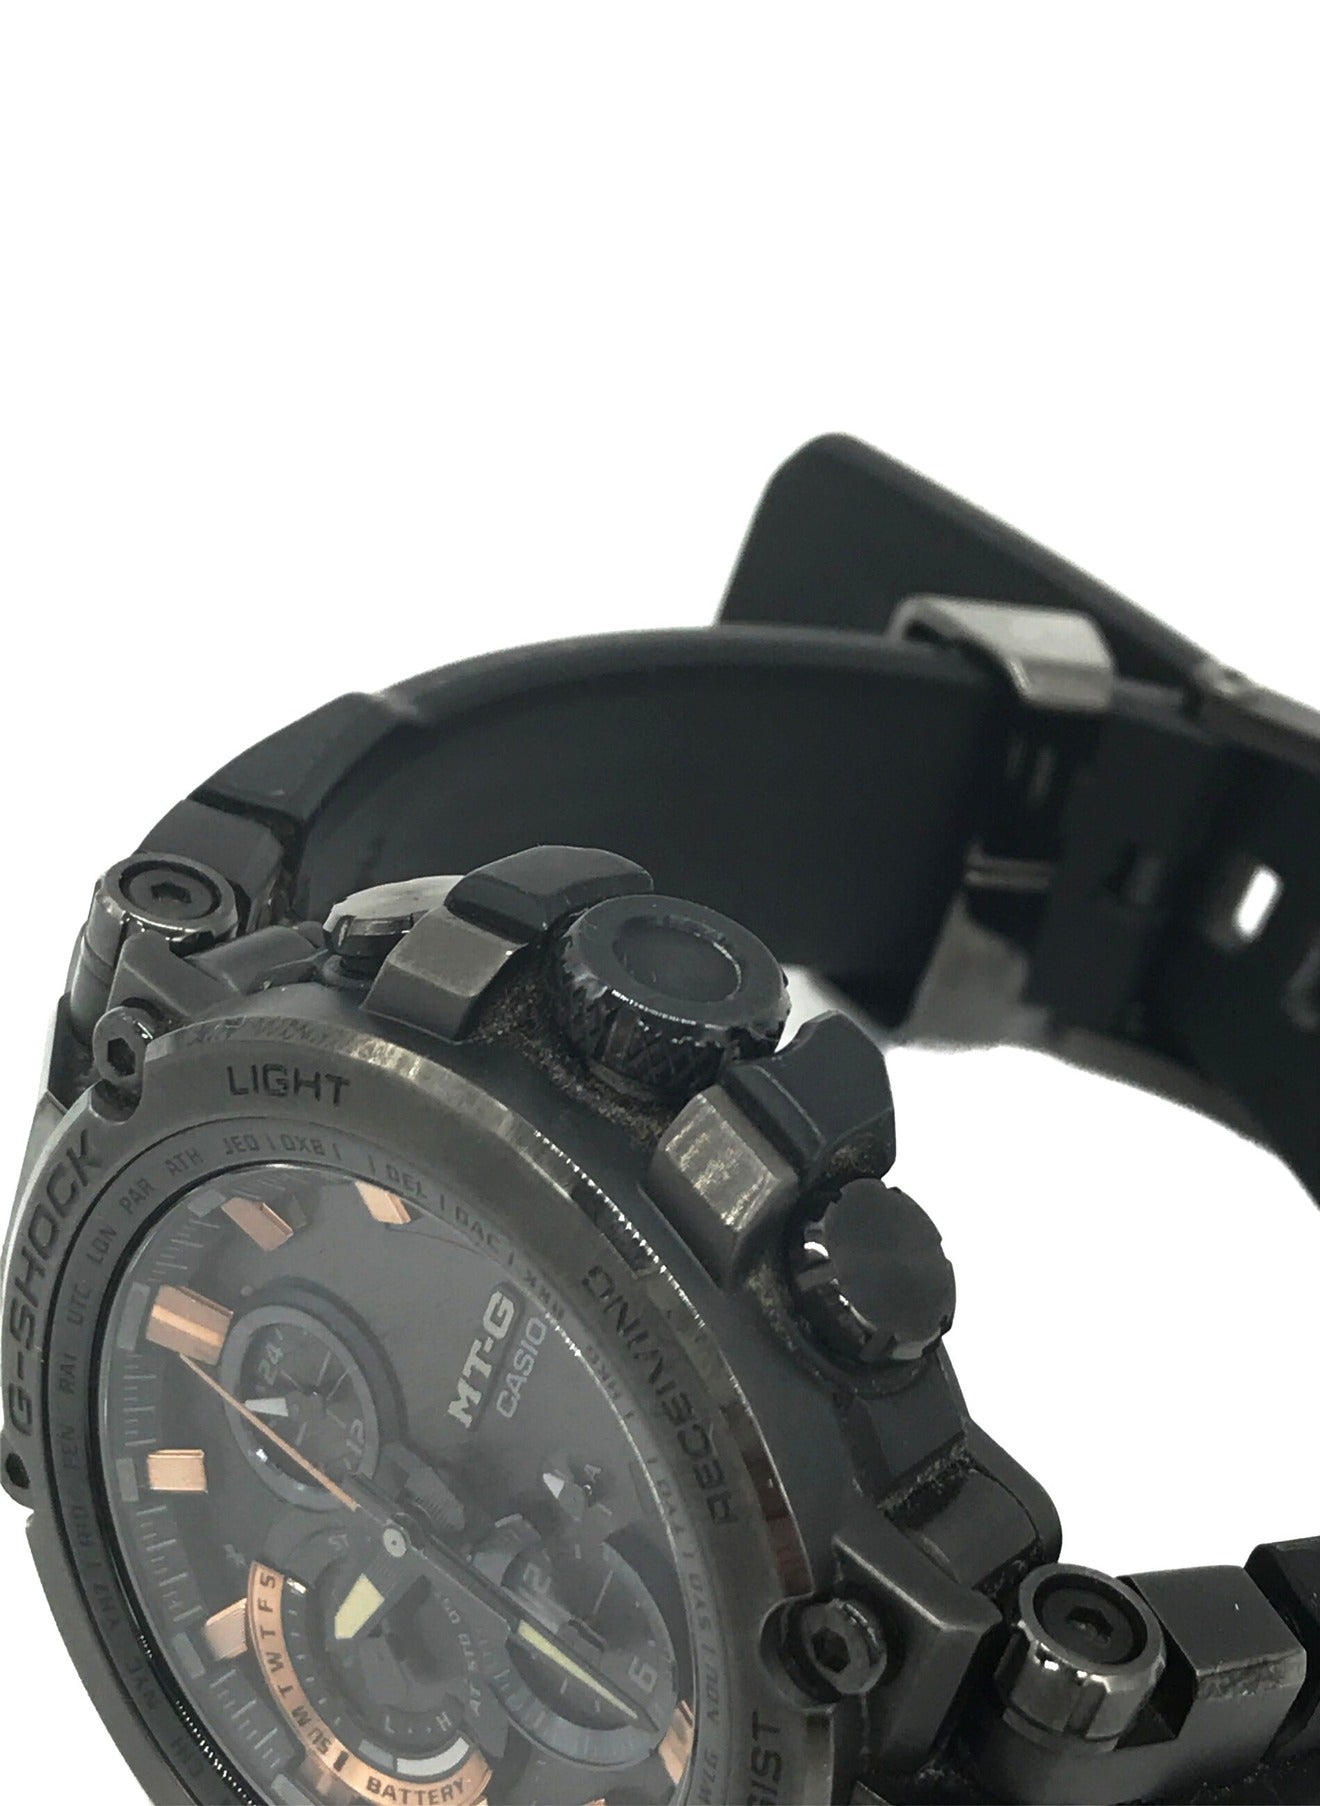 CASIO wristwatch MTG-B1000TJ-1AJR